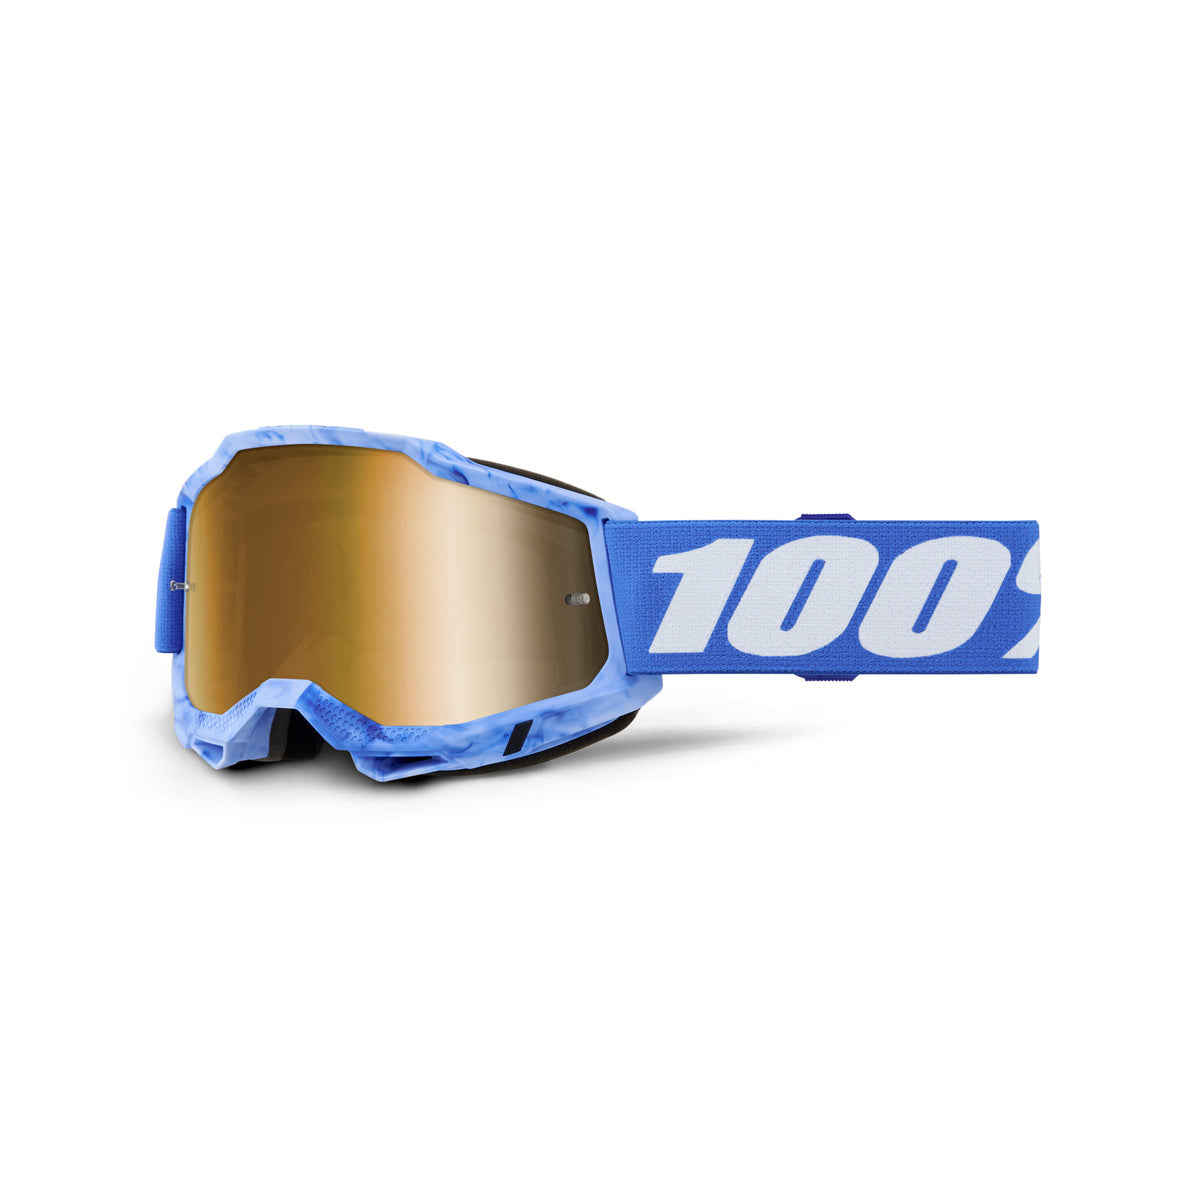 100 Percent Accuri 2 Goggles - One Size Fits Most - Sursi - Mirror True Gold Lens